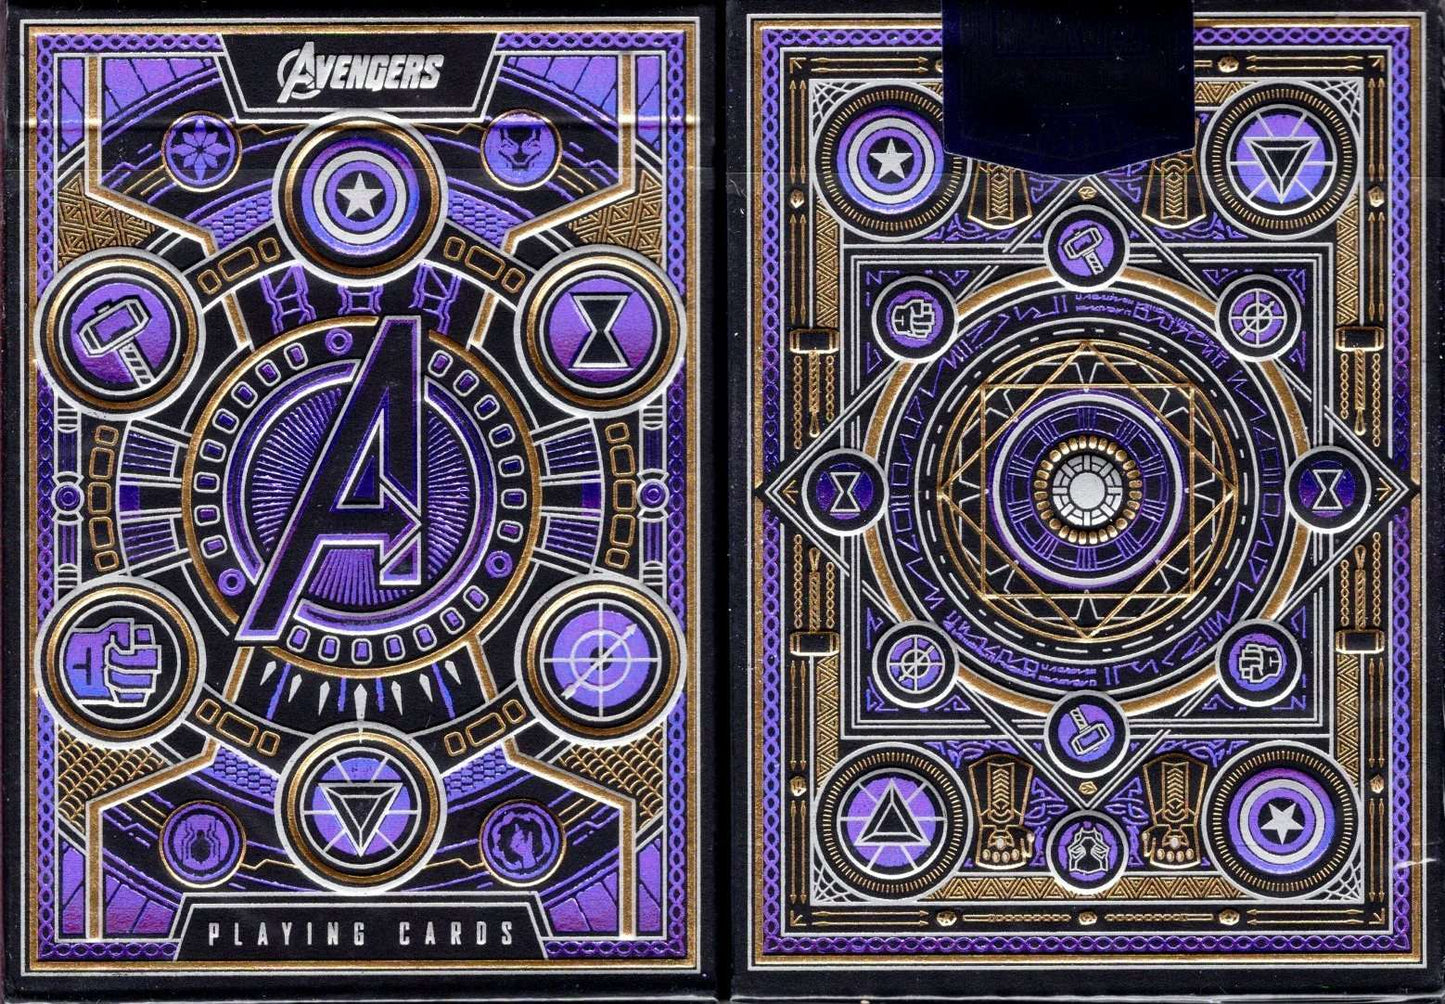 PlayingCardDecks.com-Avengers Playing Cards USPCC